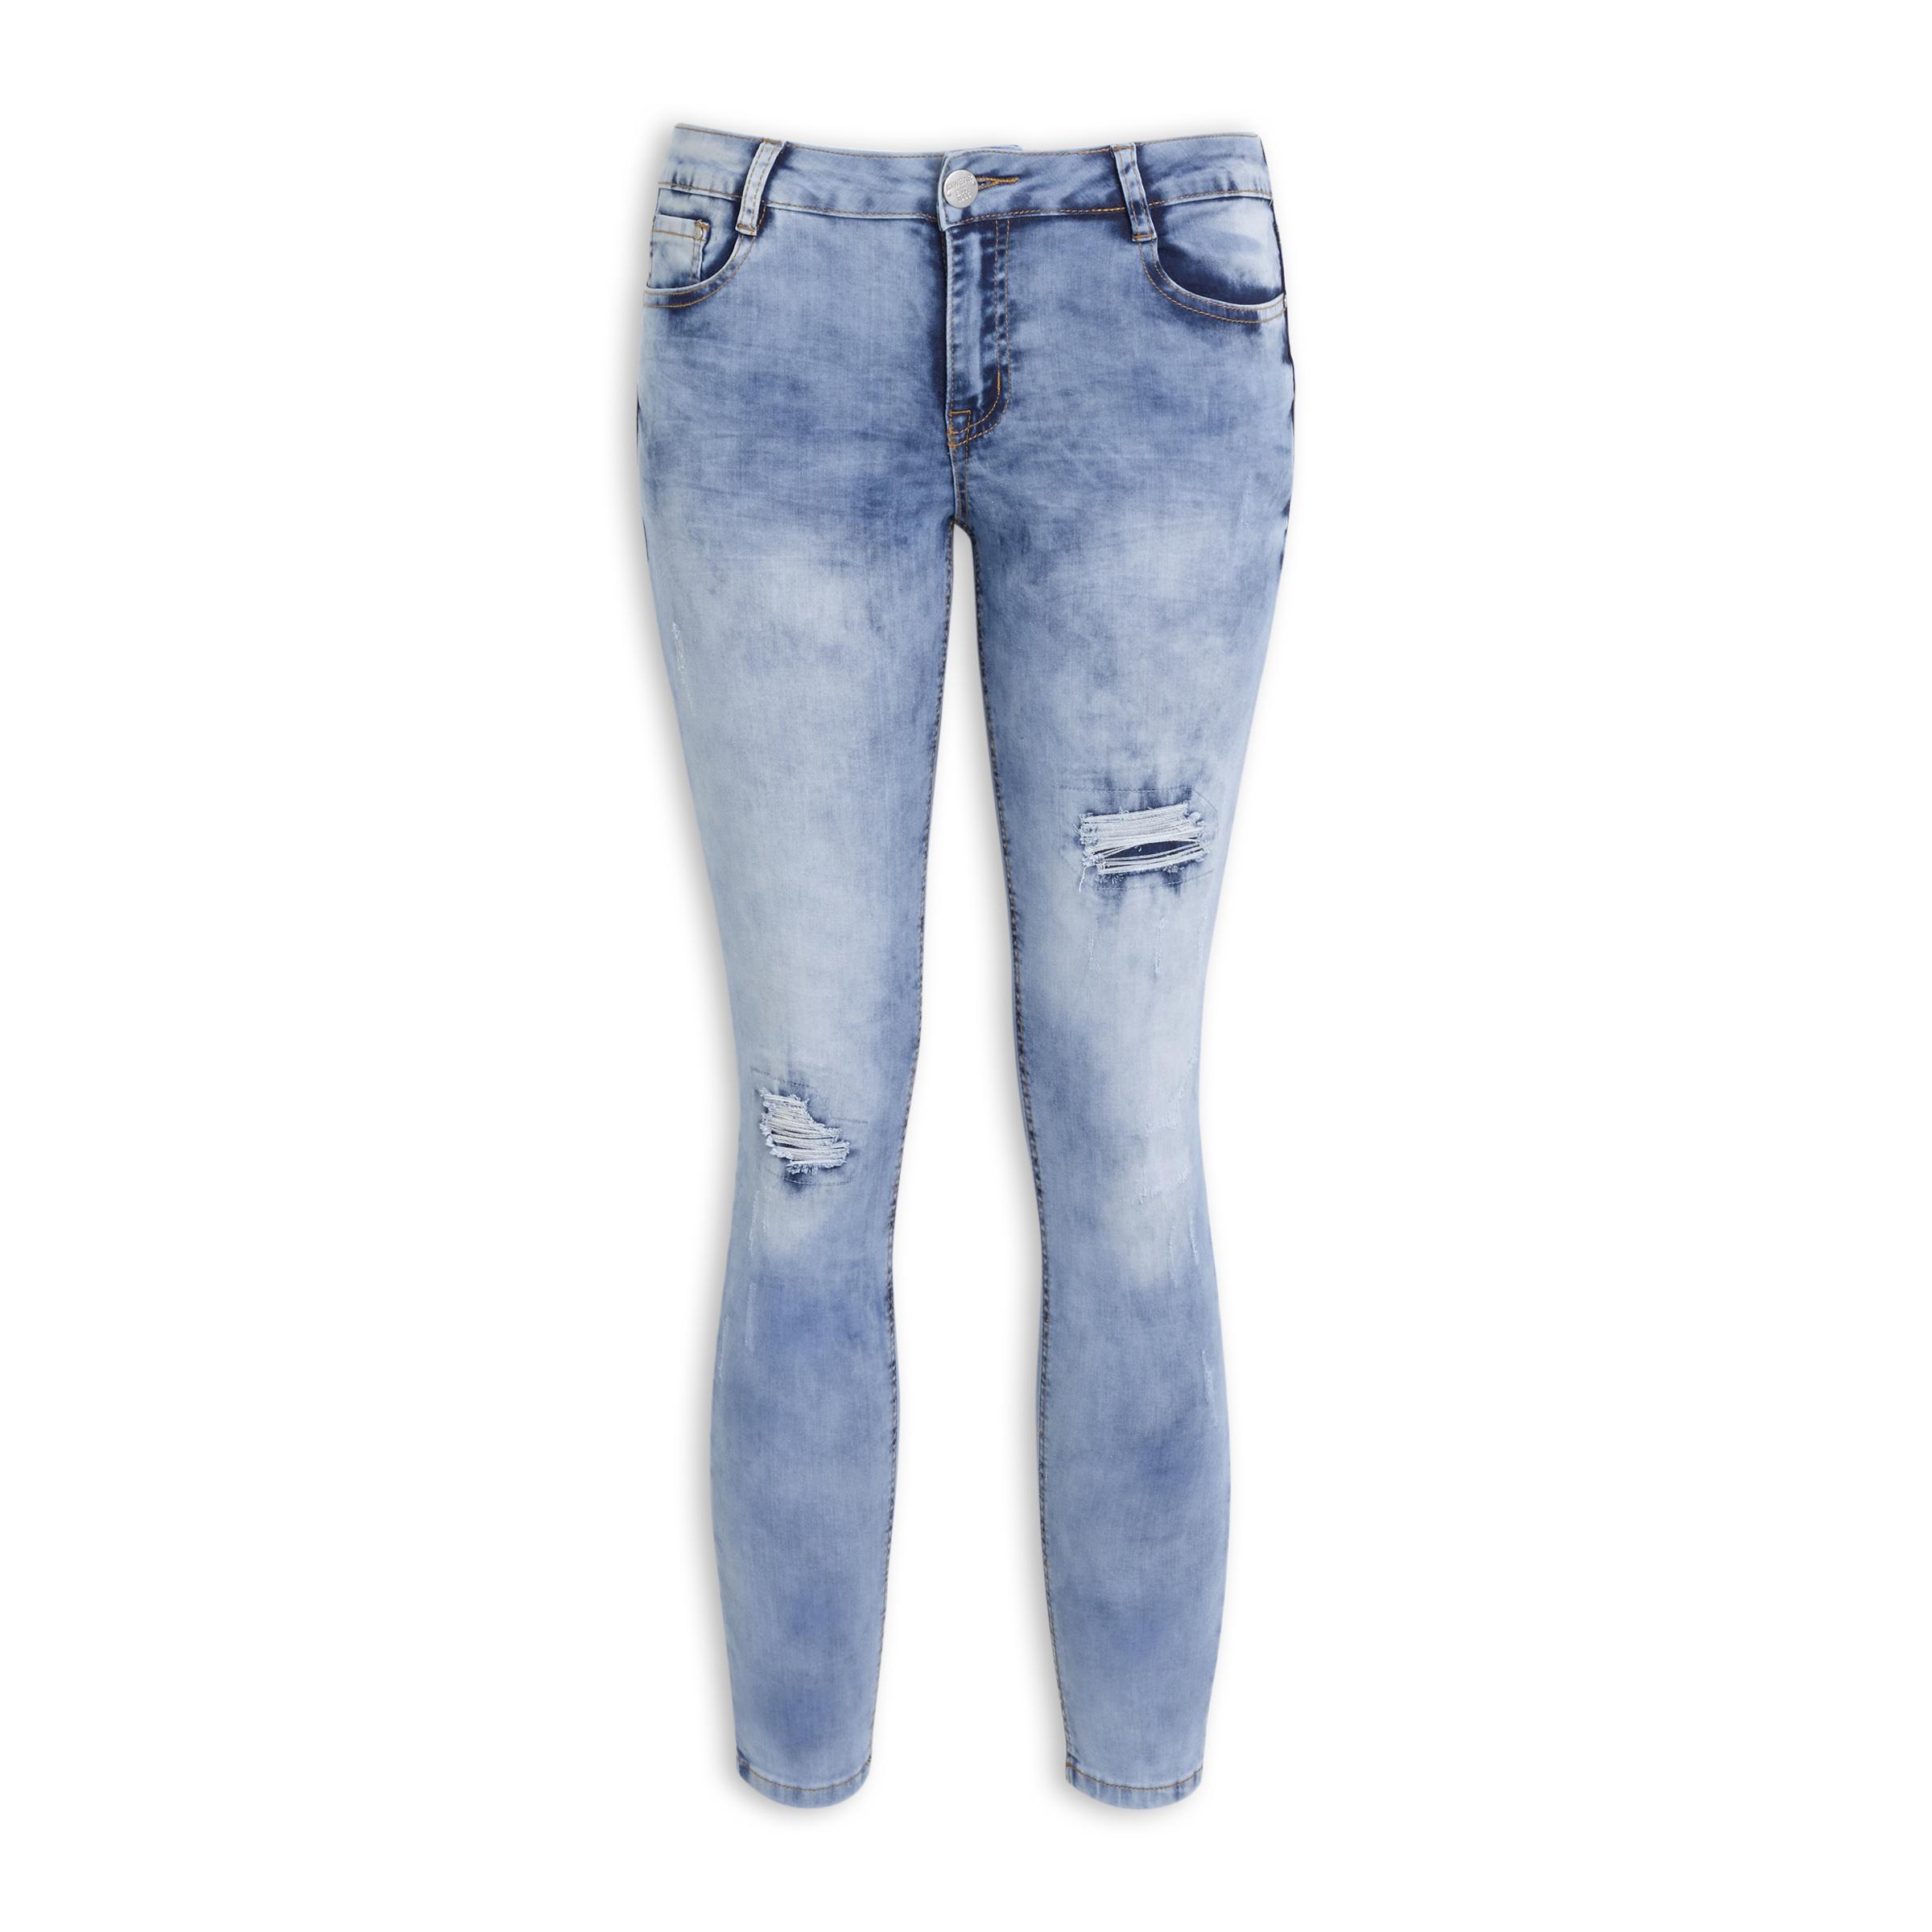 White jeans online shopping